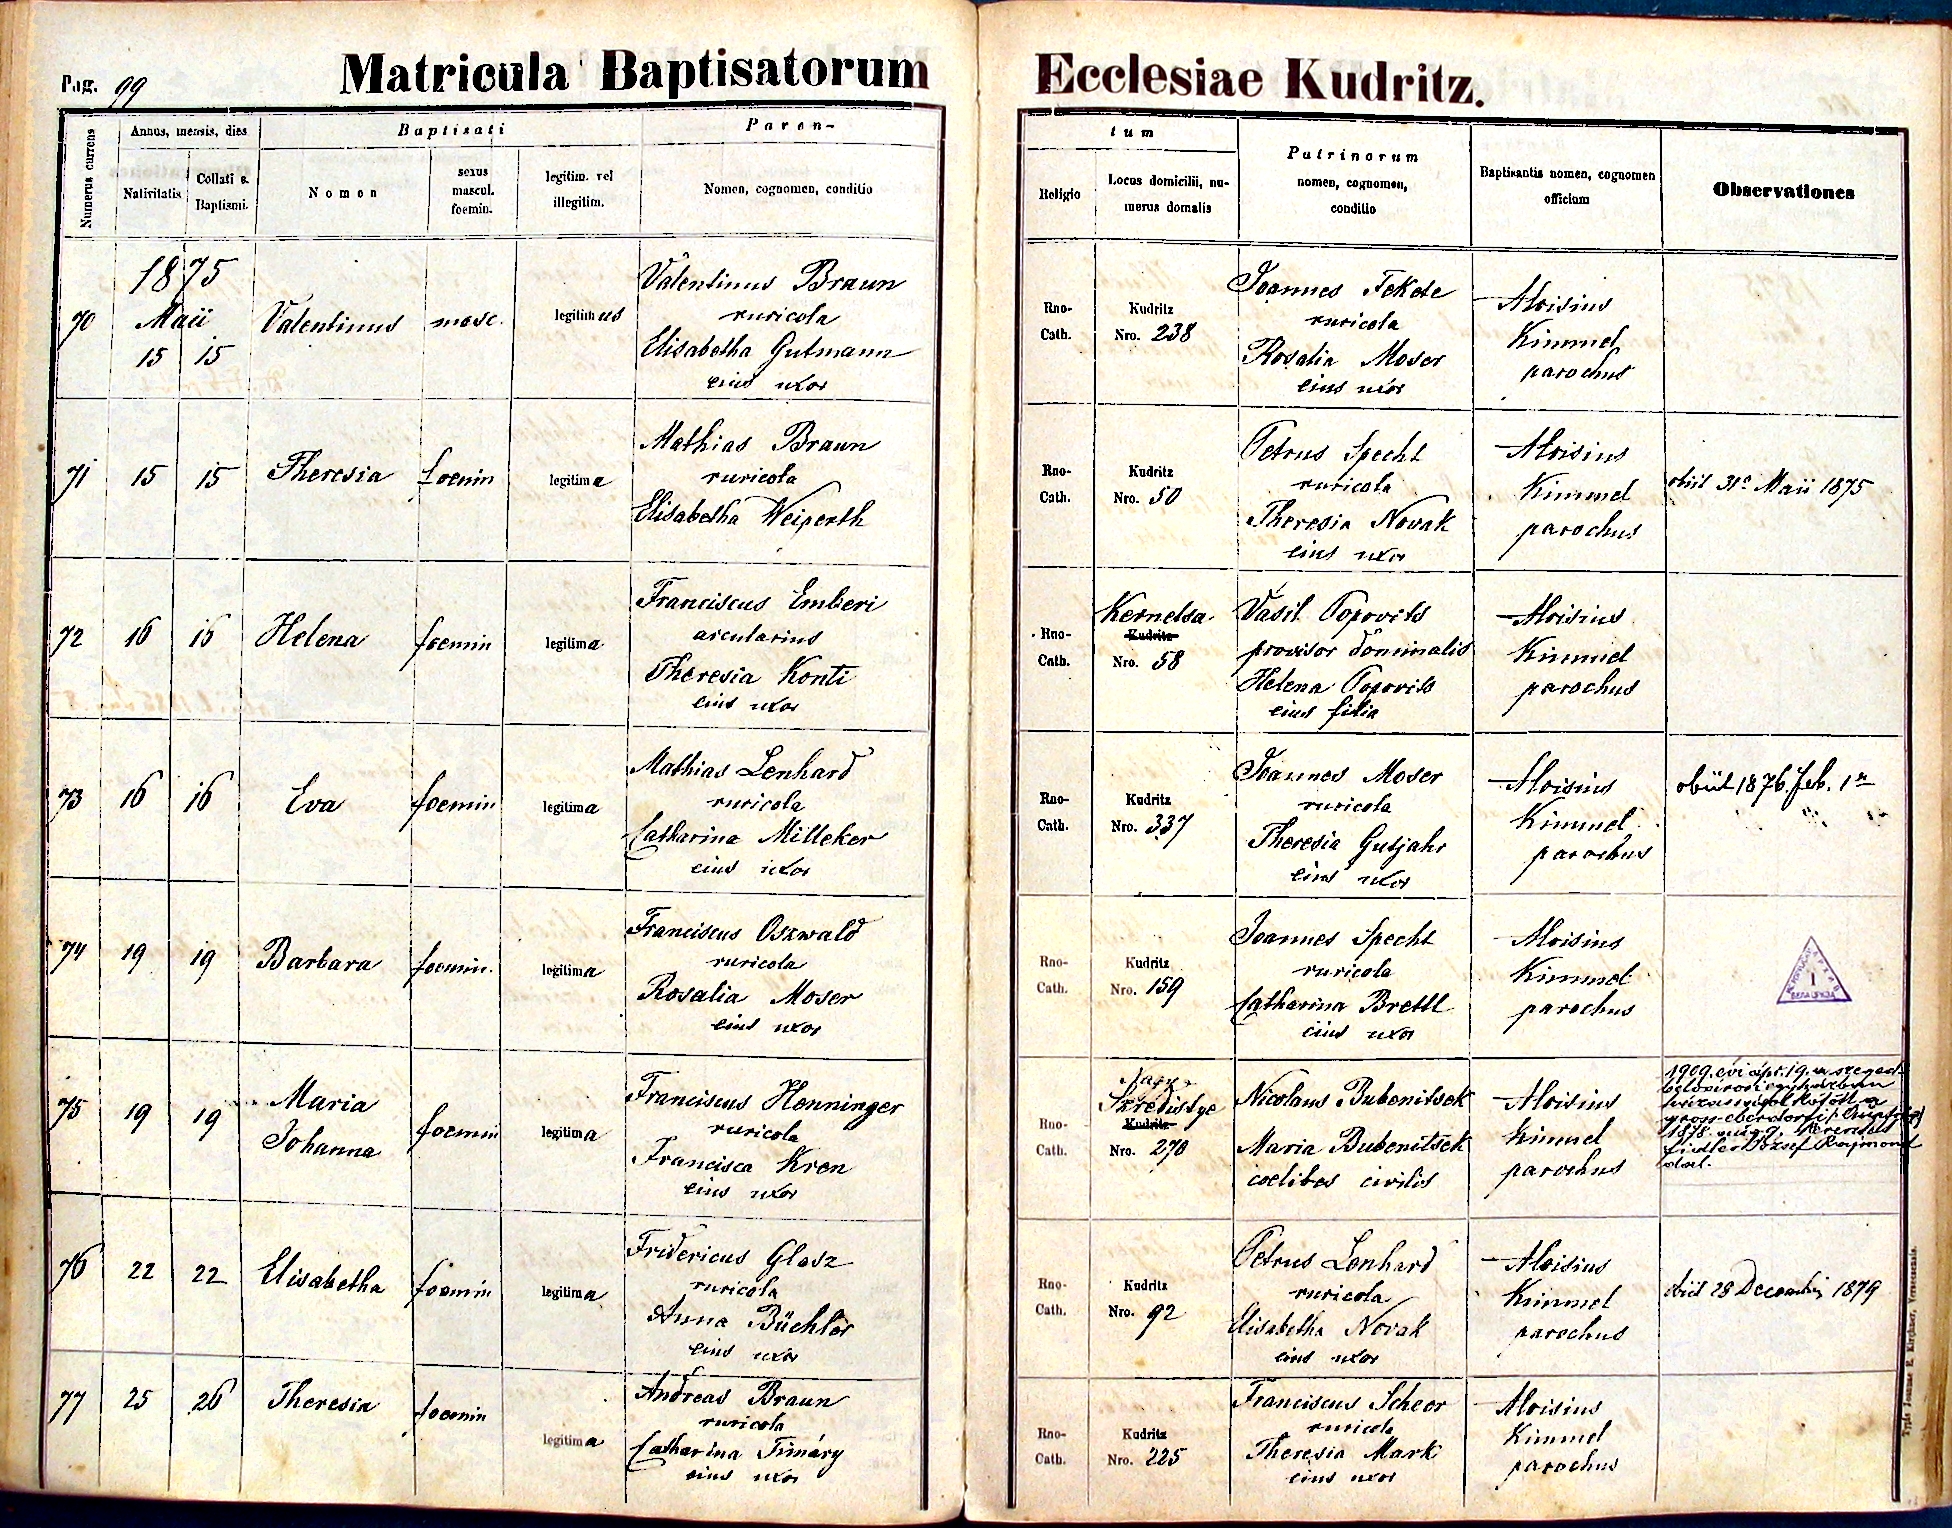 images/church_records/BIRTHS/1884-1899B/1890/099